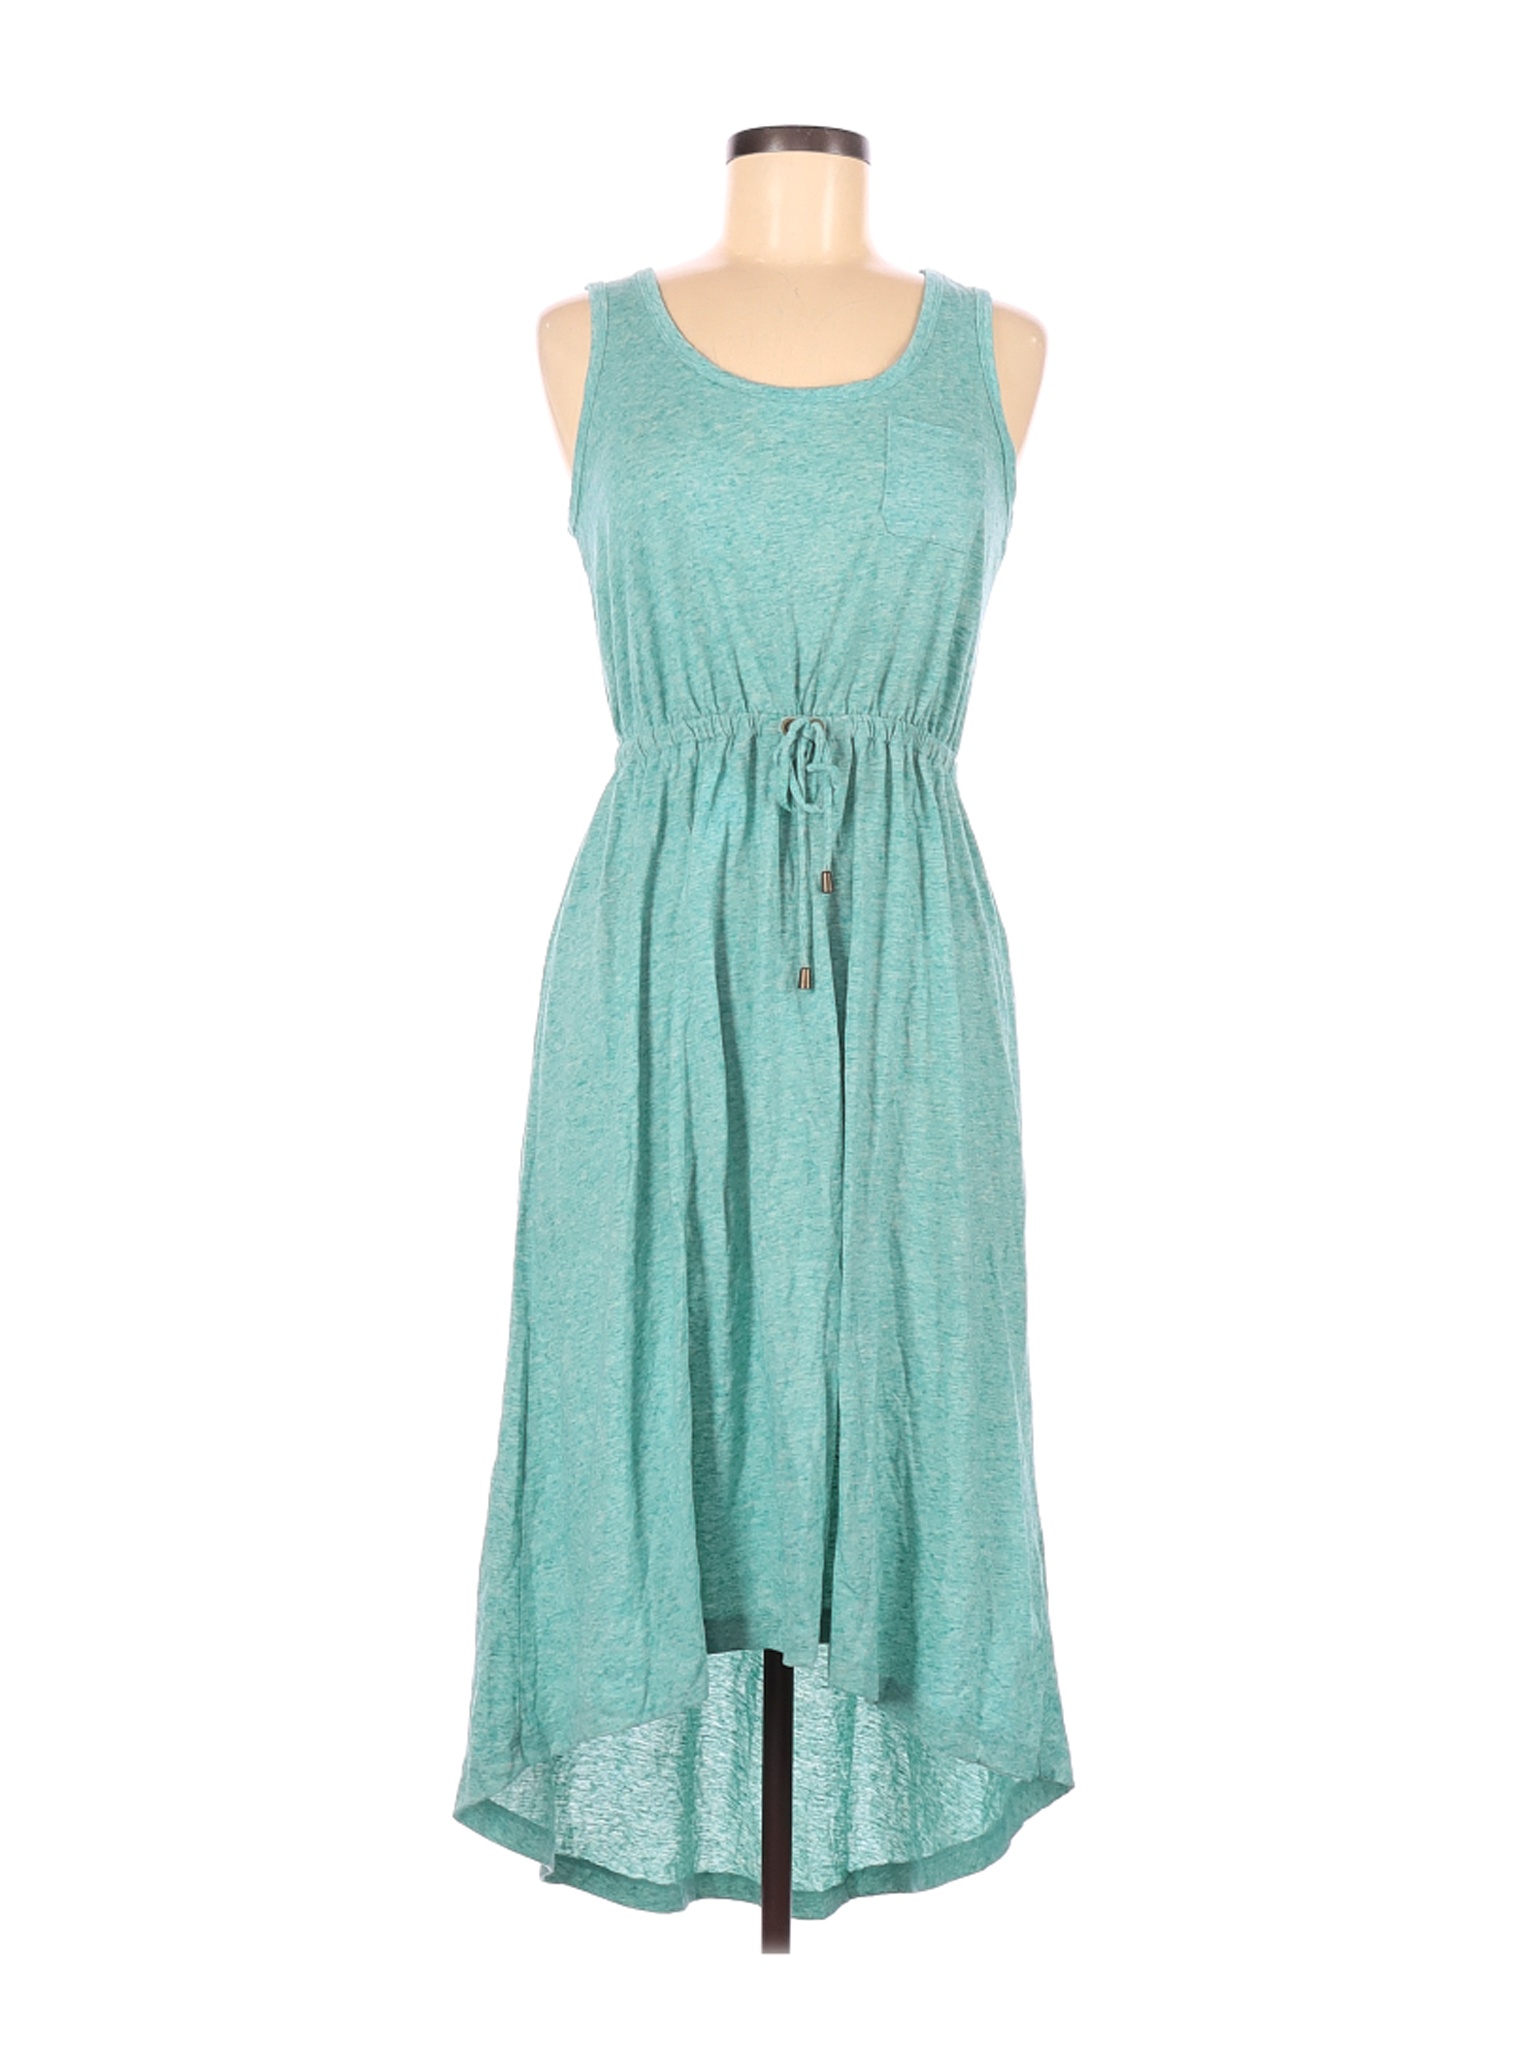 Sonoma Goods for Life Women Blue Casual Dress M Petites | eBay